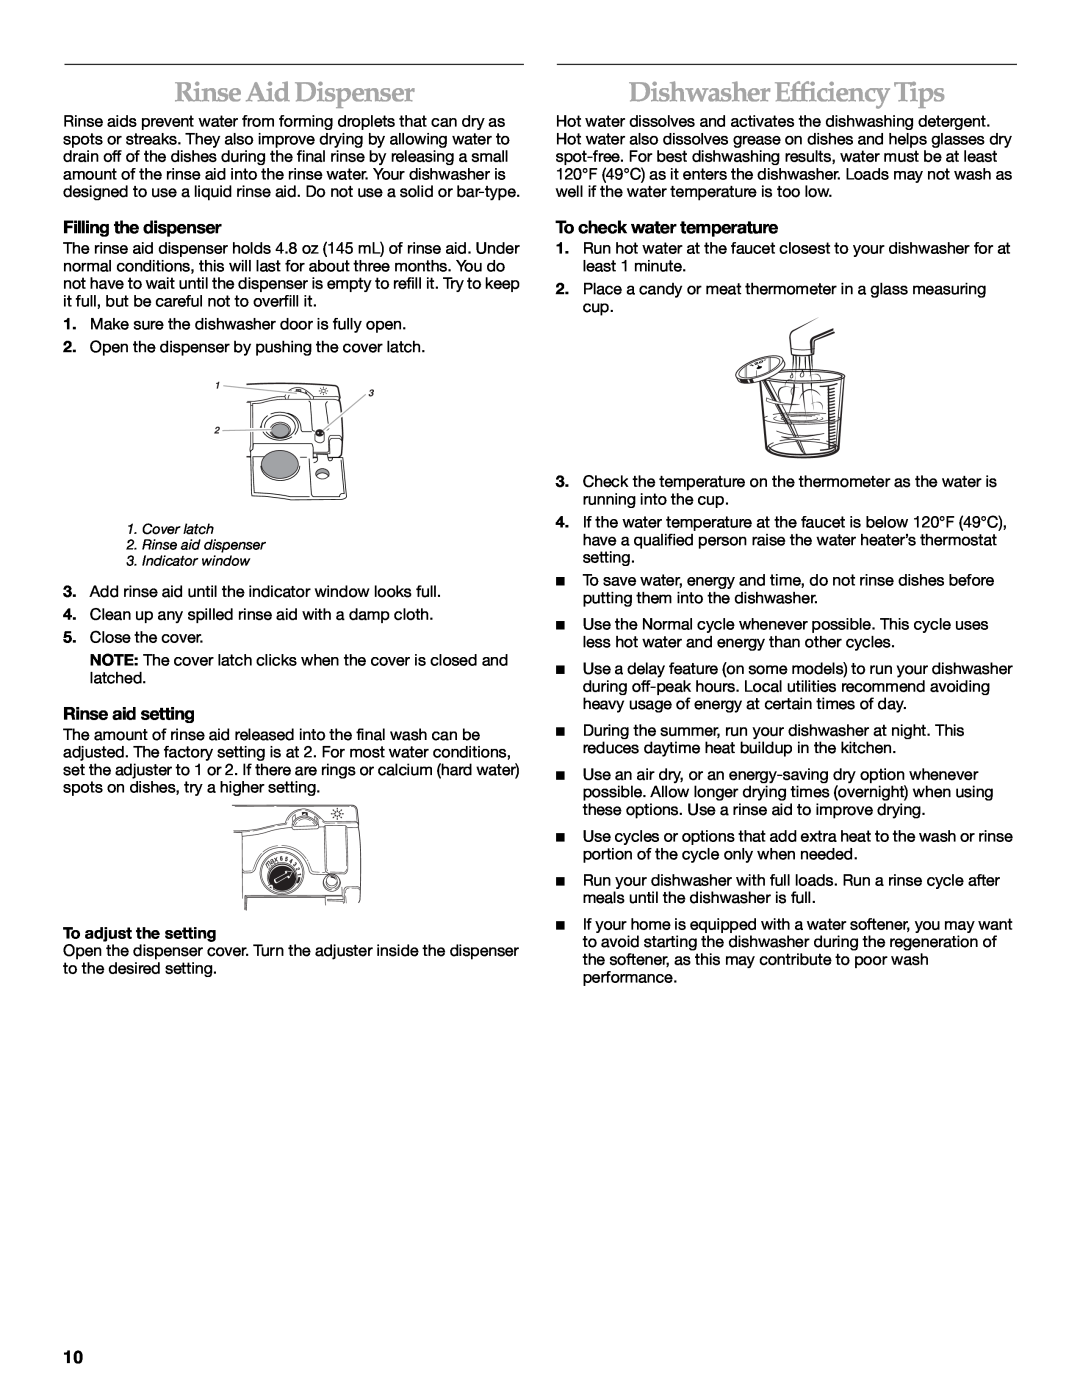 KitchenAid KUDM01TJ manual Rinse Aid Dispenser, Dishwasher Efficiency Tips, Rinse aid setting, To check water temperature 